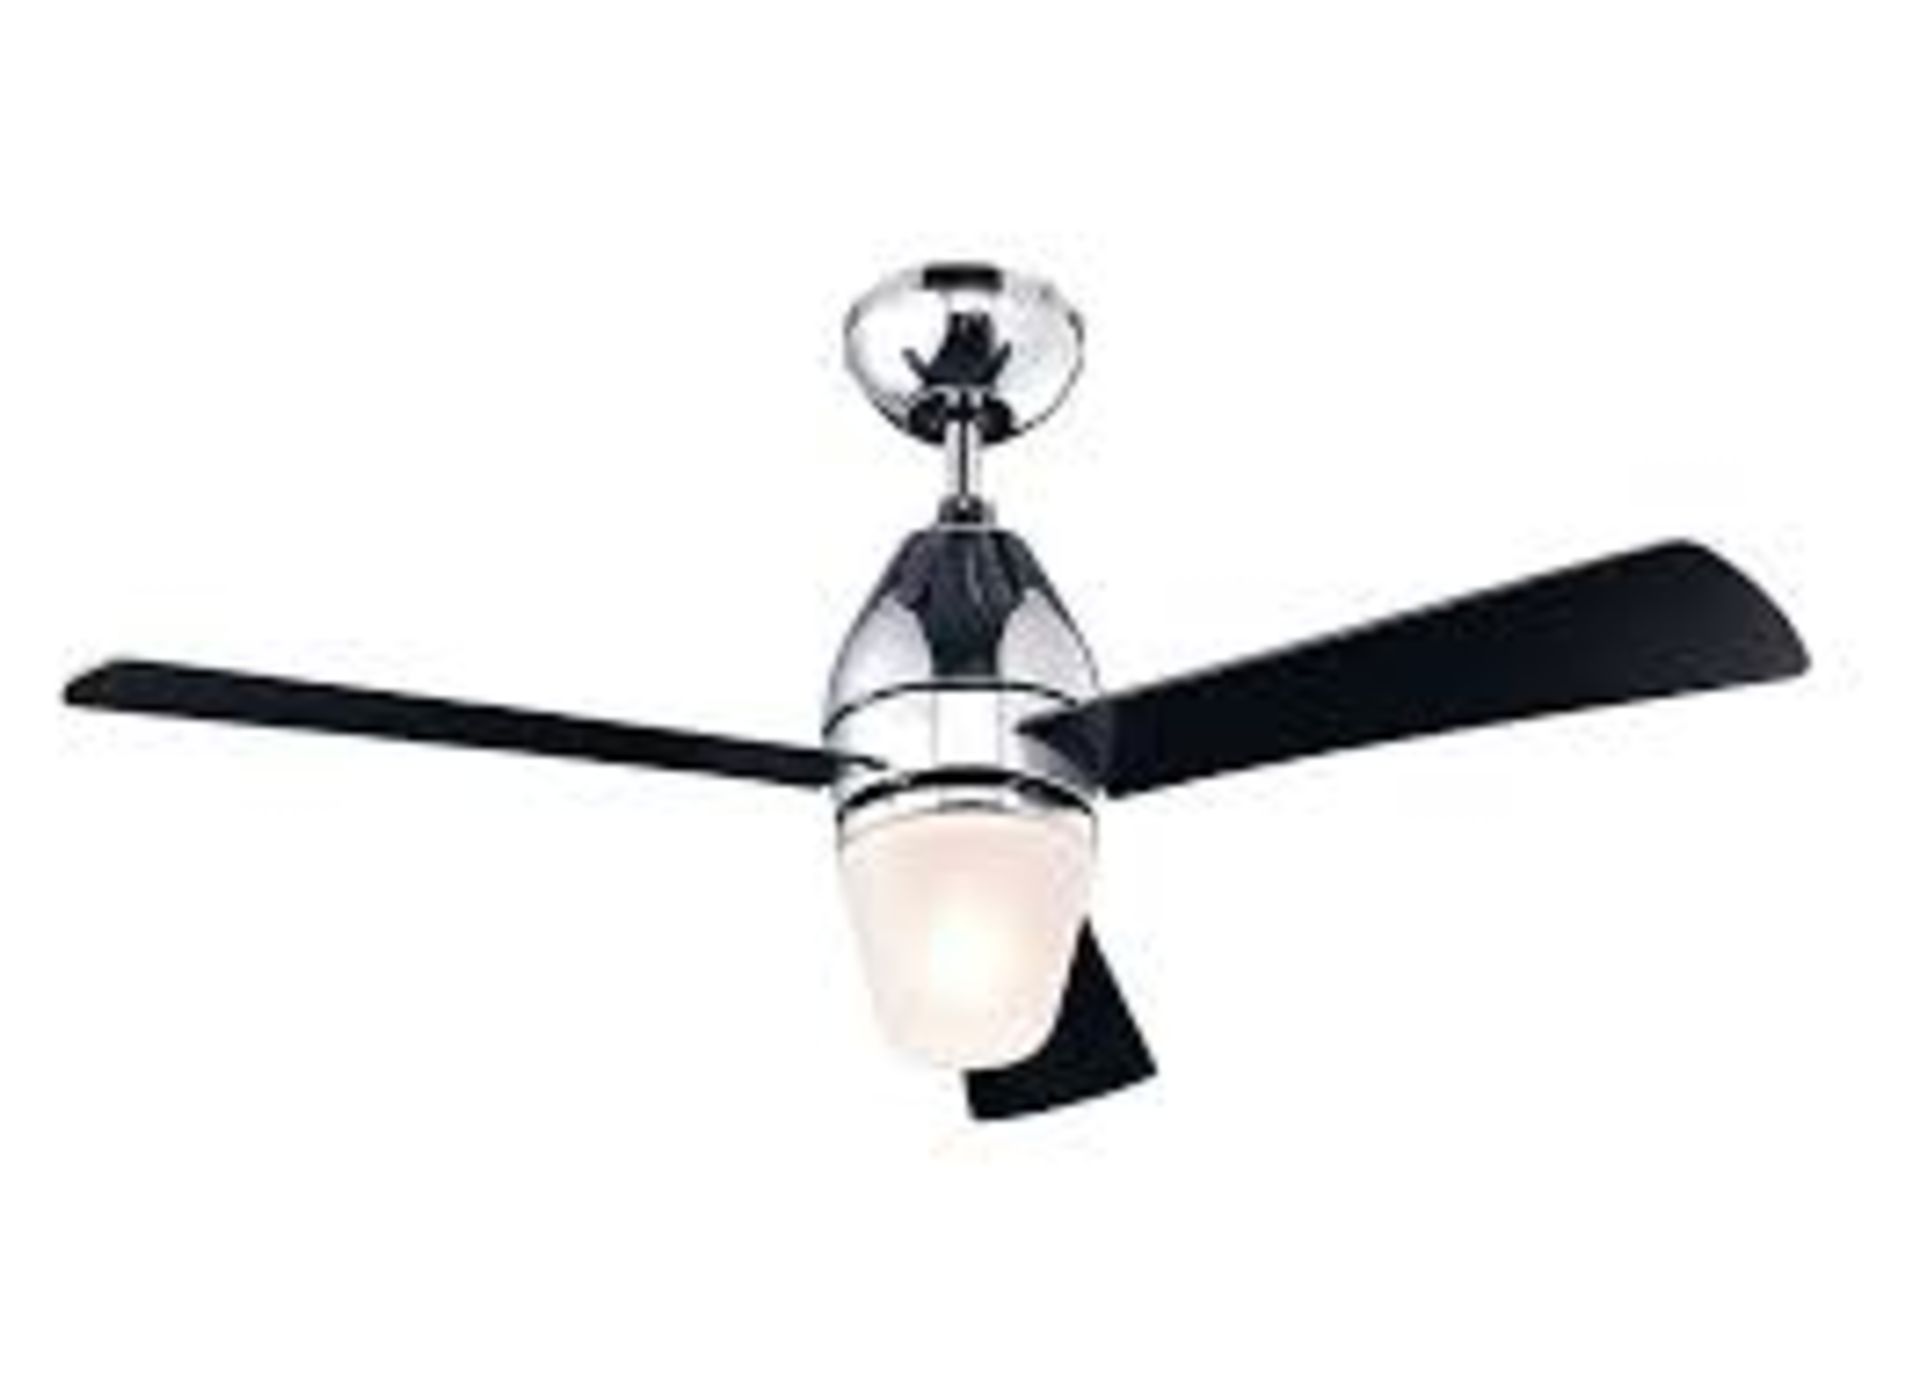 Colours Shek Modern Chrome effect Ceiling fan light. - R10BW. This ceiling fan will provide a